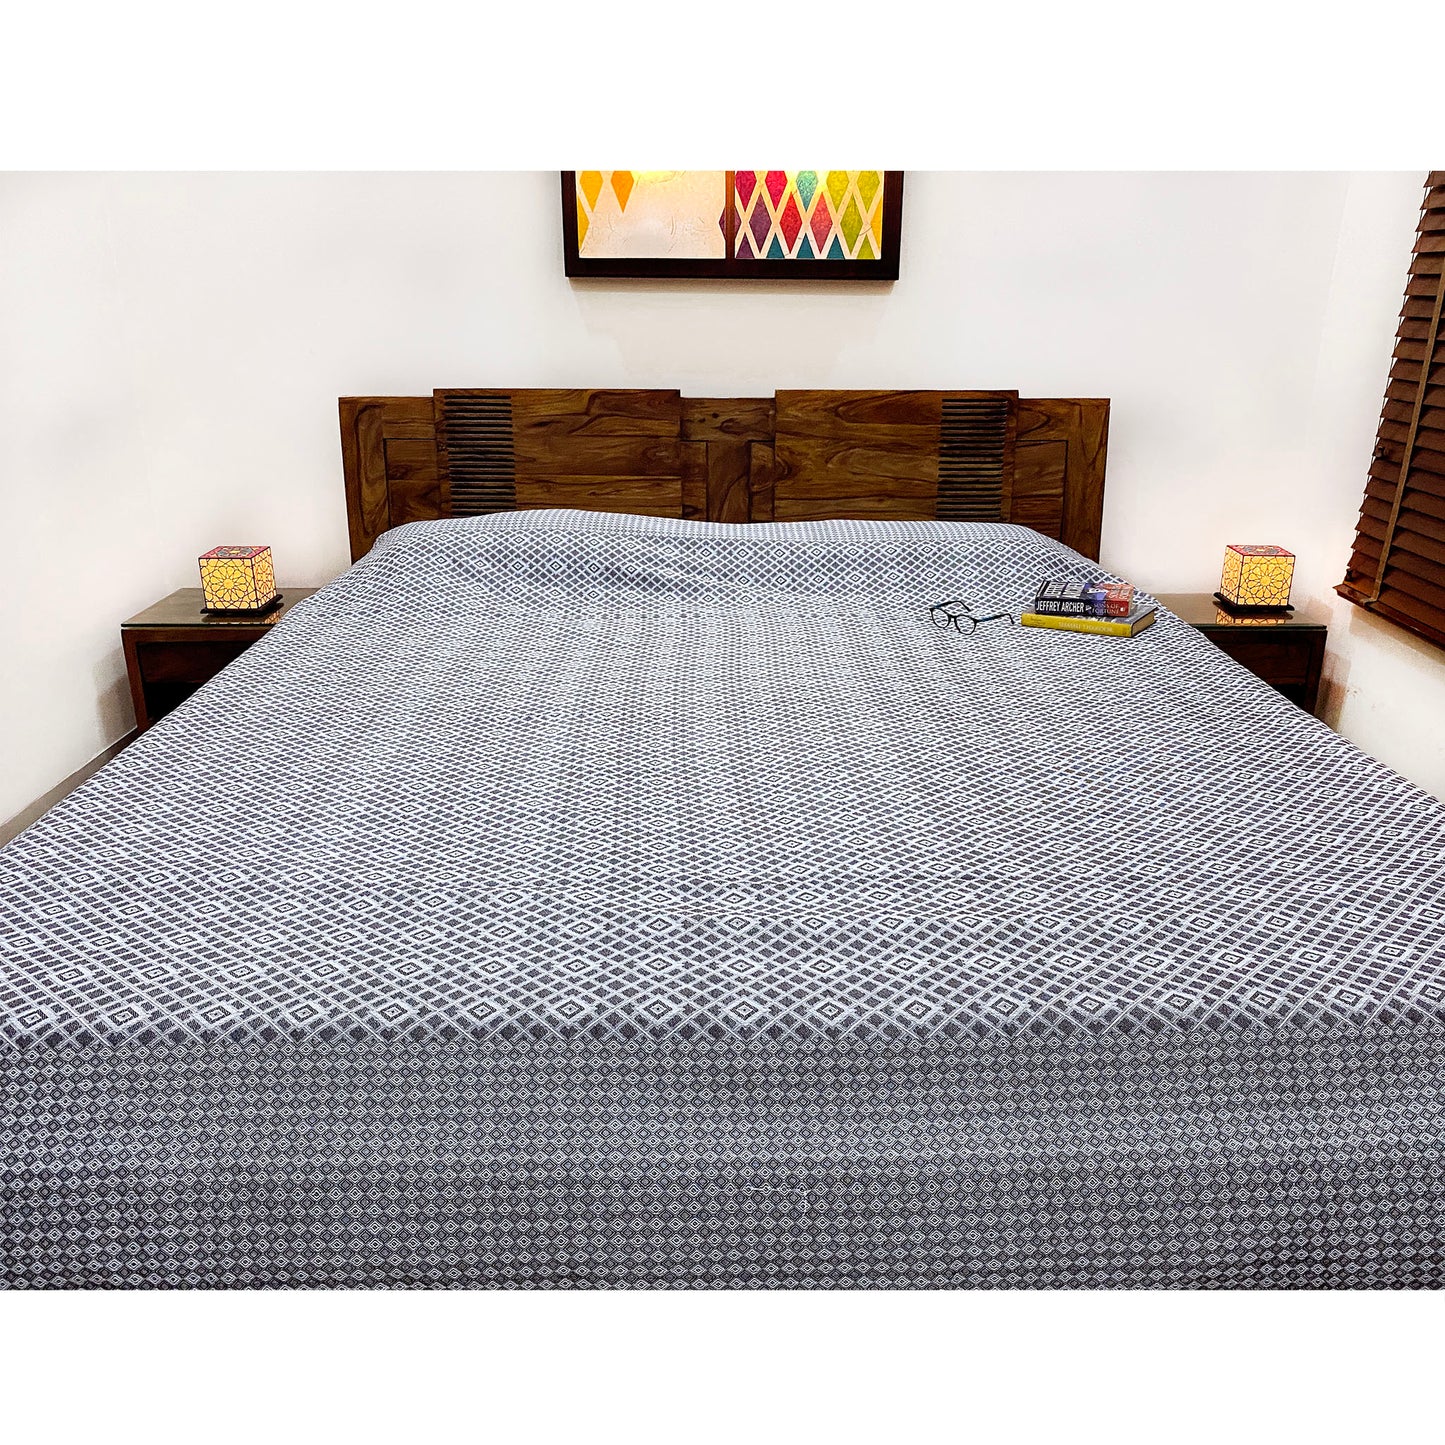 Reversible Intricate Handloom Bed Cover